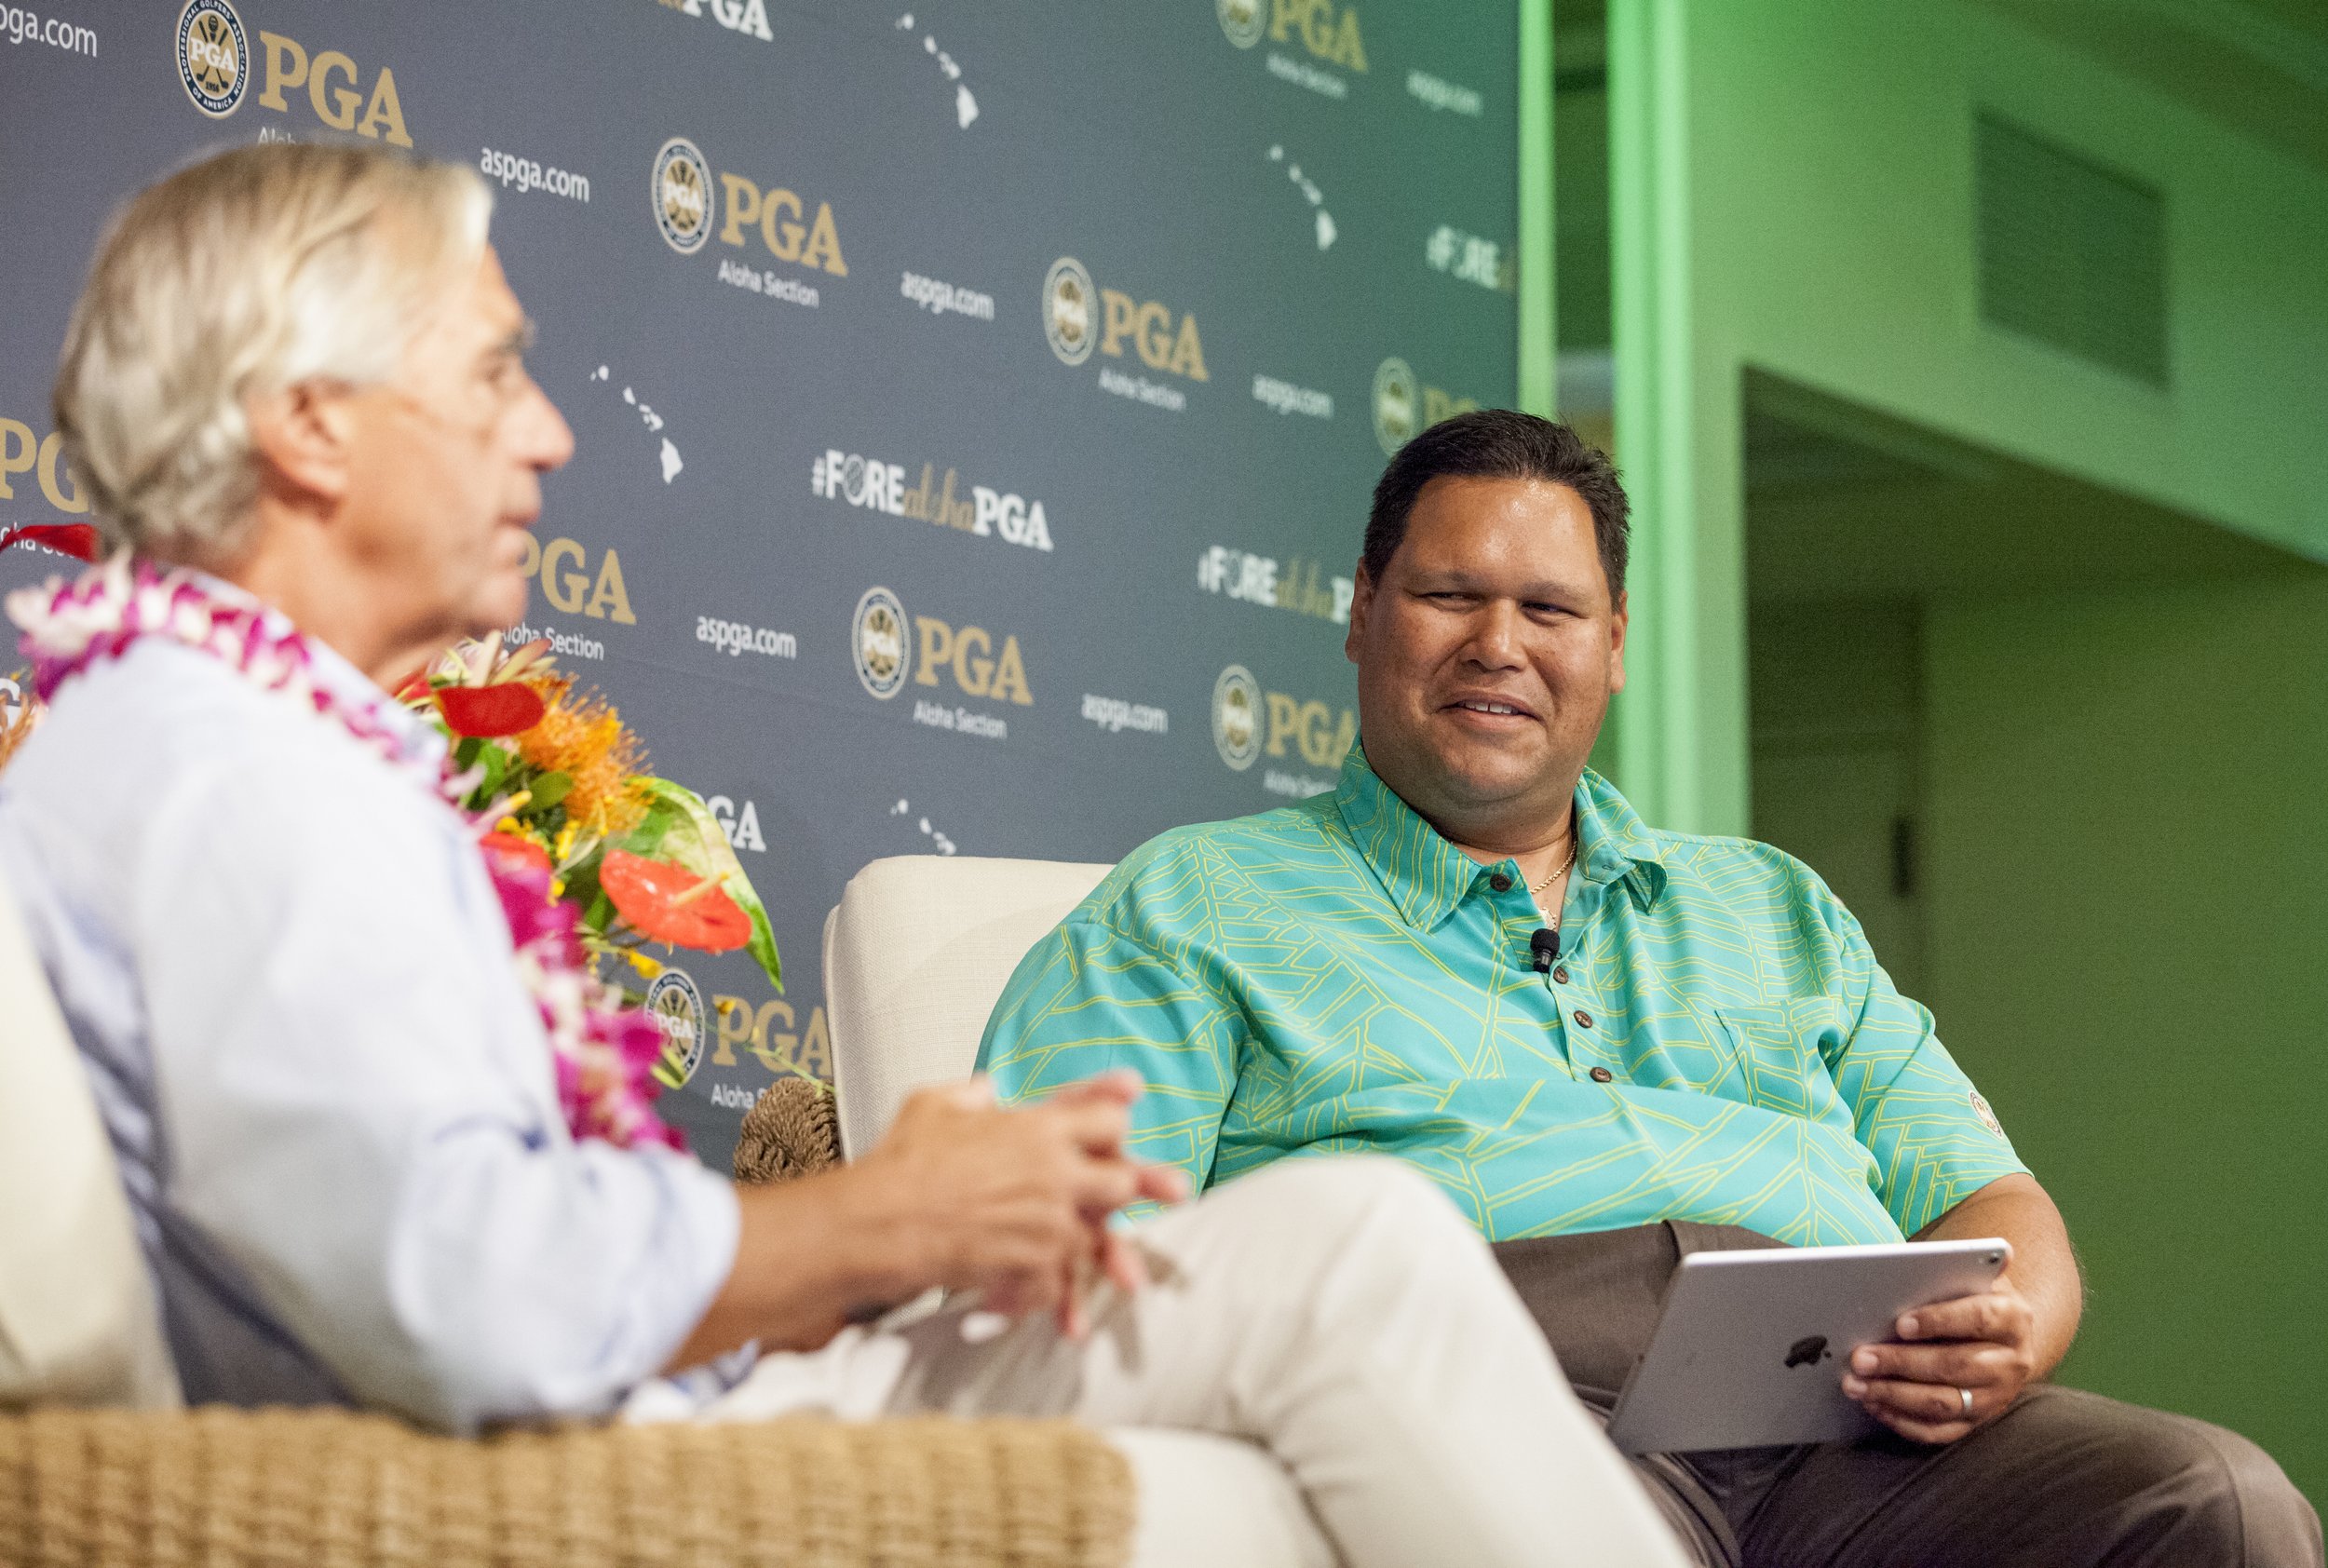  Wes Wailehua with Seth Waugh, CEO of PGA of America at the Hawai‘i Golf Industry Conference.  Photos courtesy Wes Wailehua  